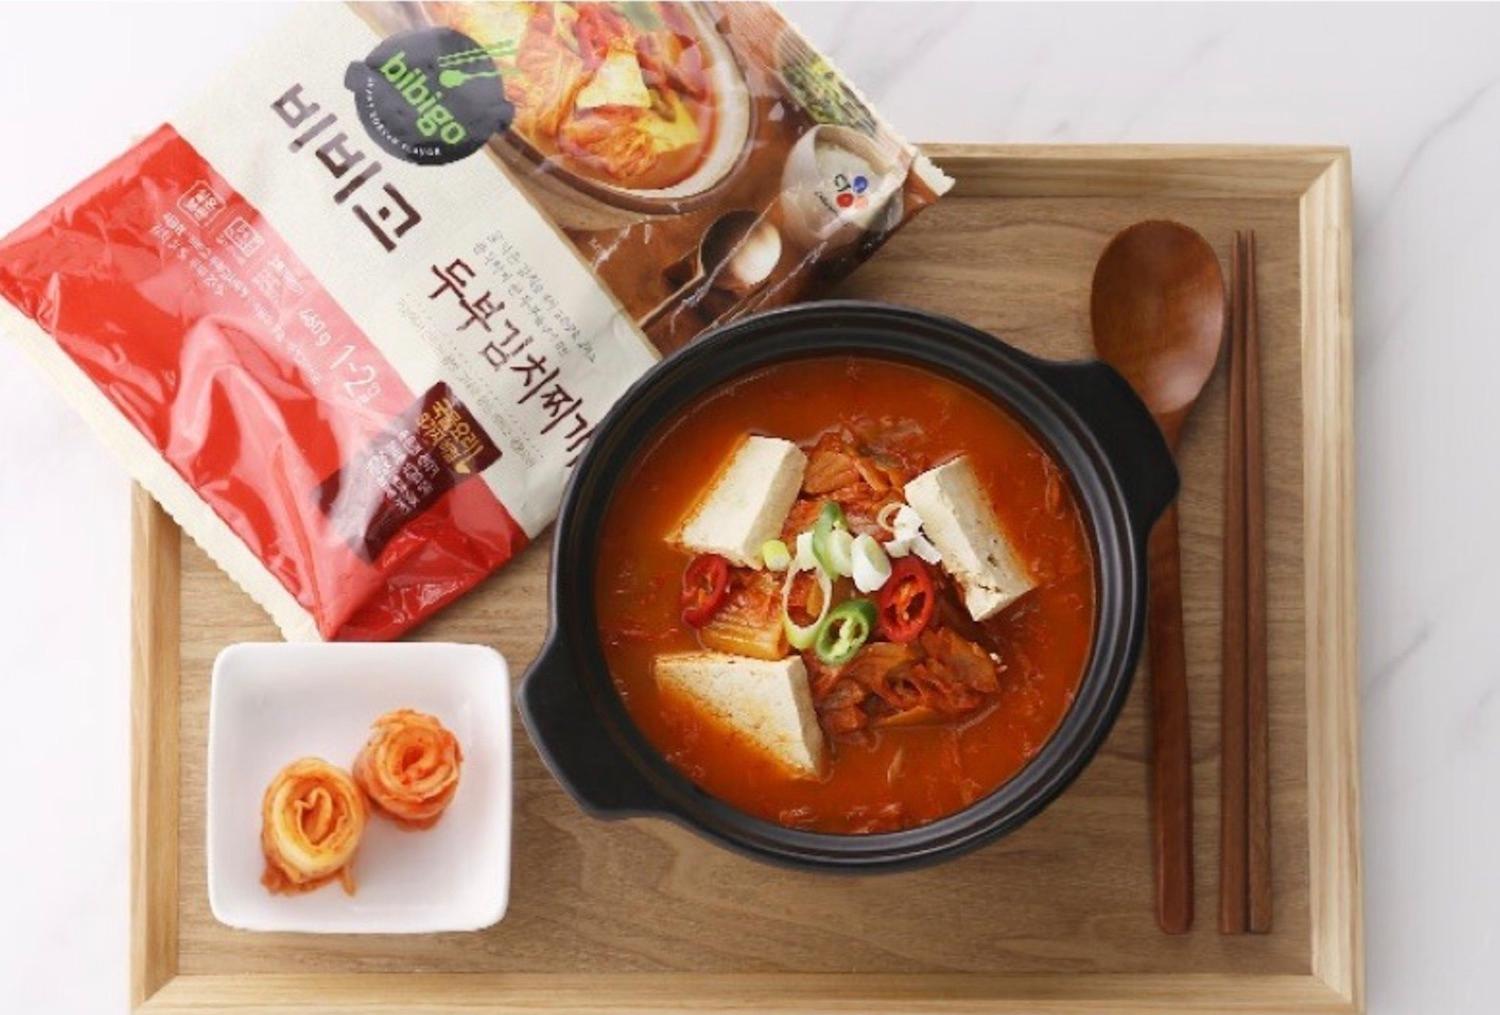 korean brand bibigo's tofu kimchi jjigae on a tray with kimchi and cutlery